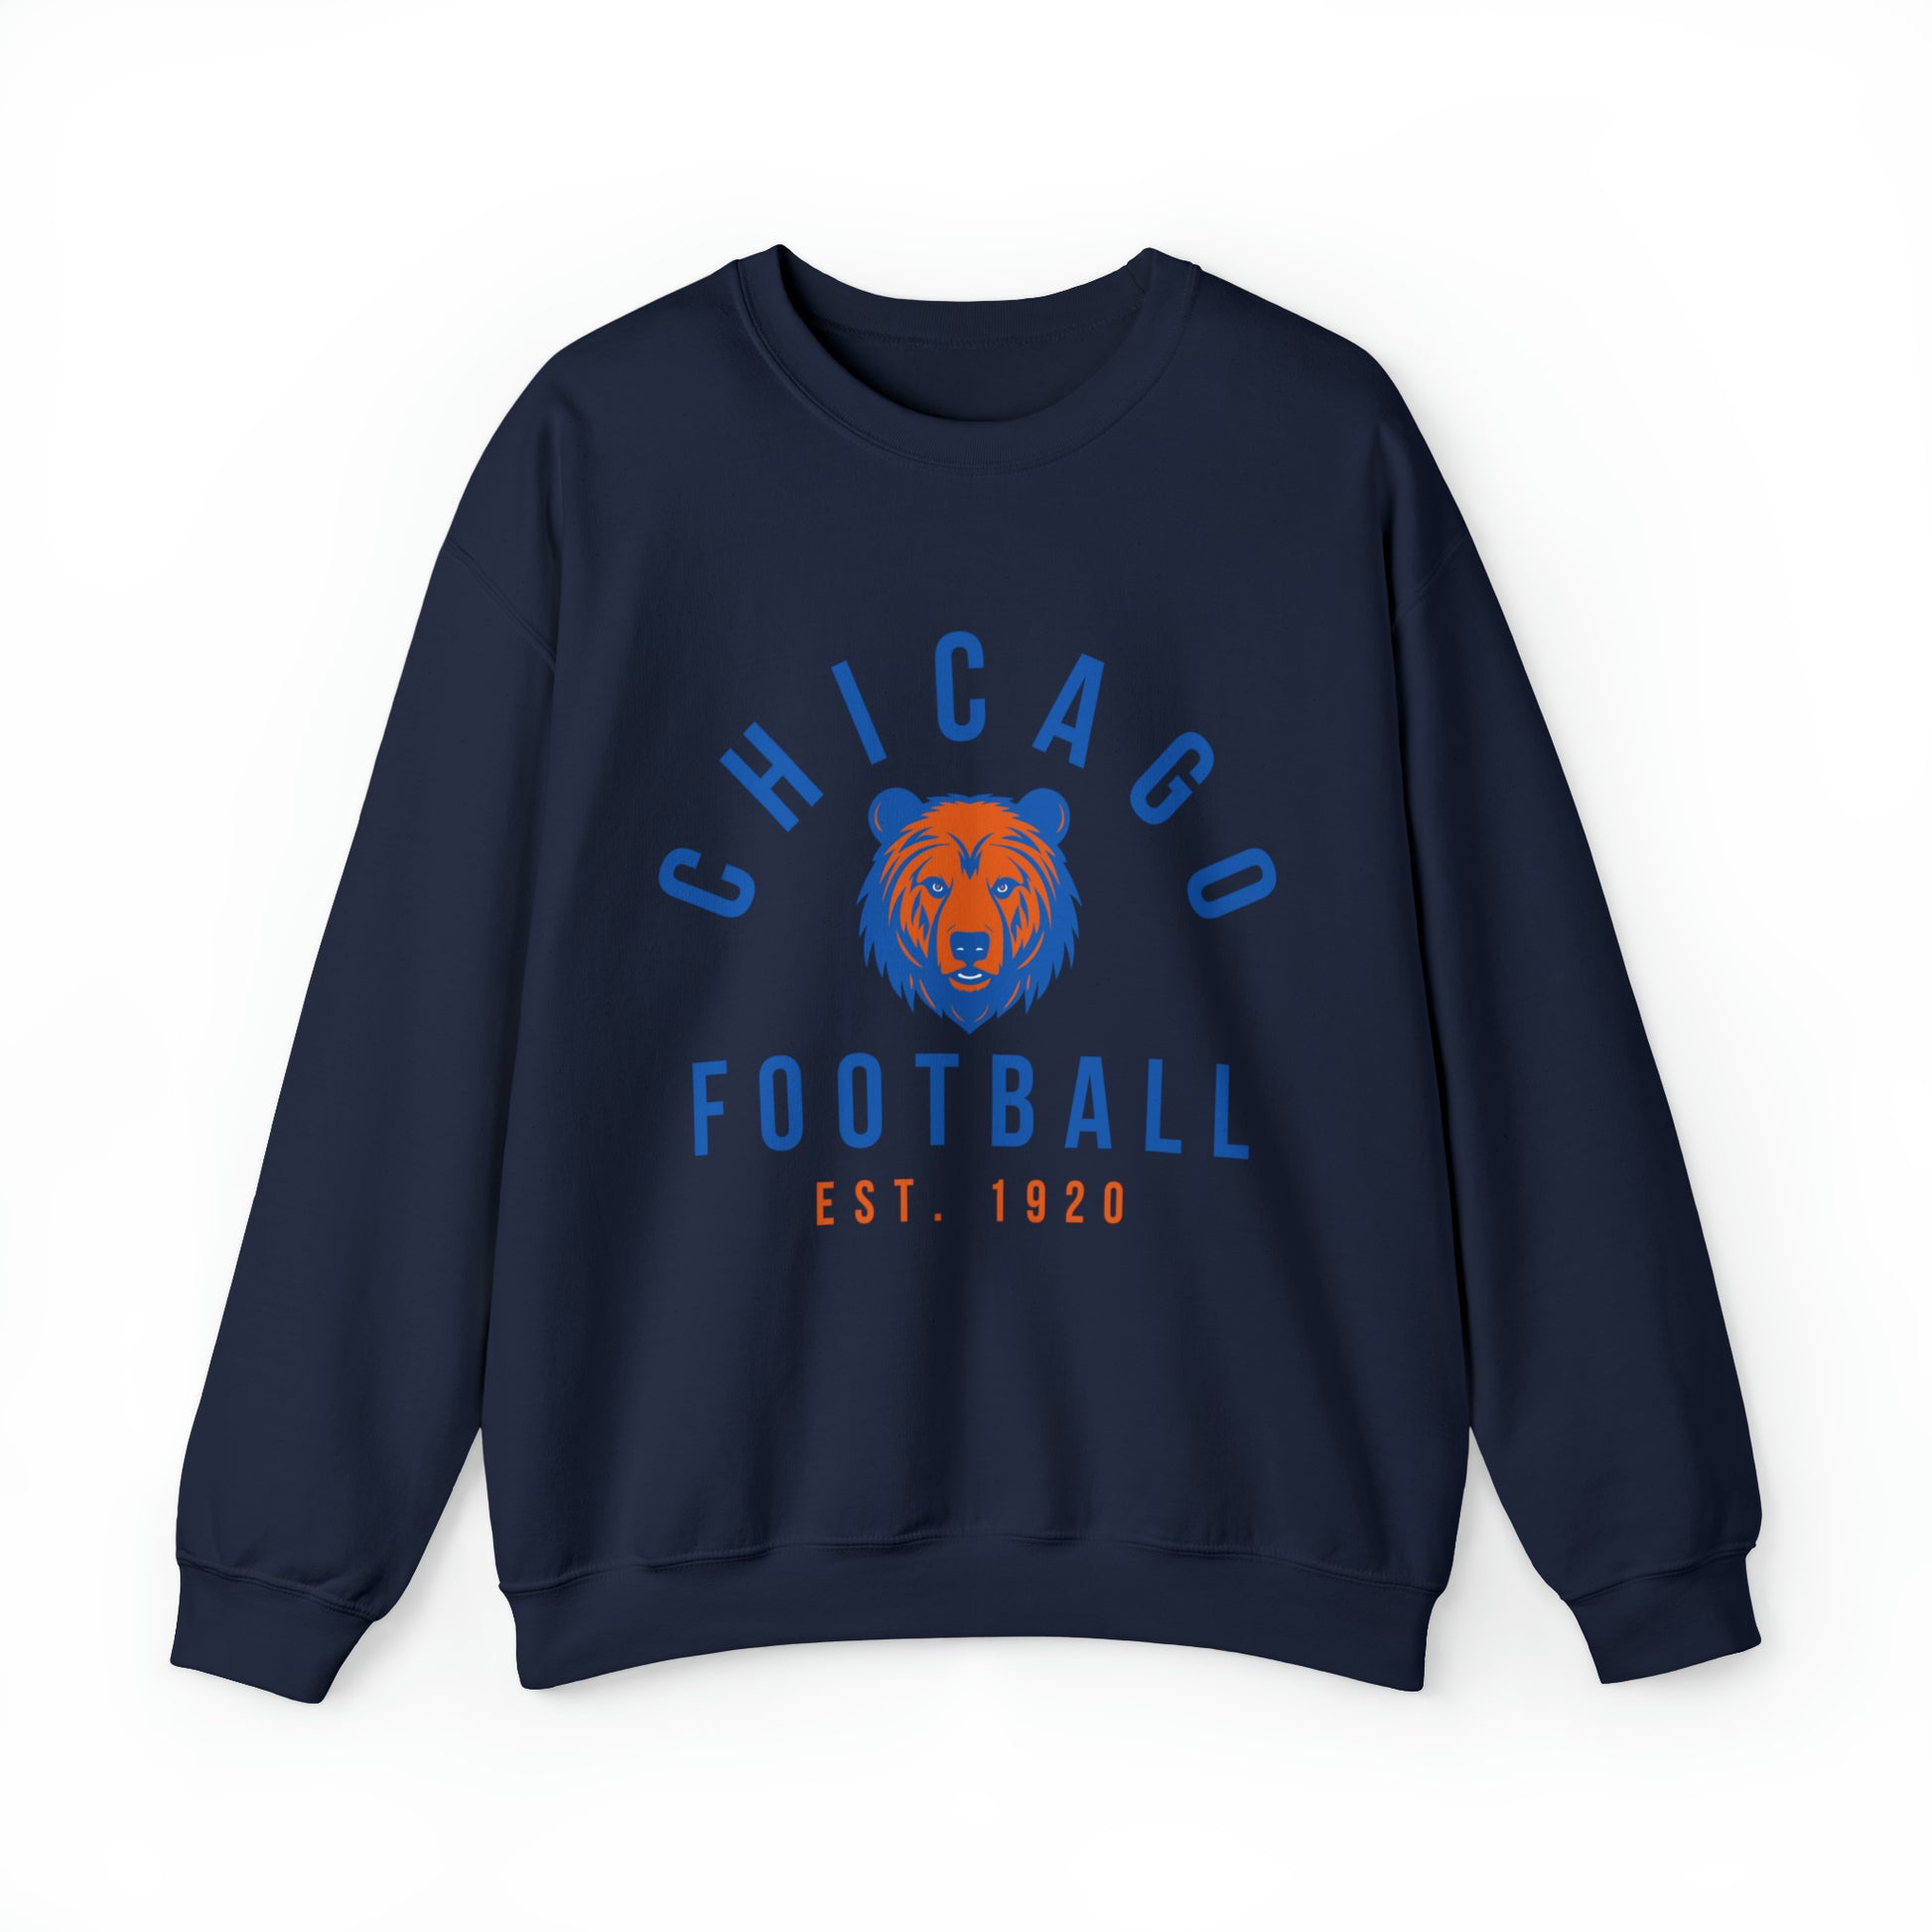 Navy Chicago Bears Crewneck Sweatshirt - Vintage Football - Retro Style Football Apparel - Design 4